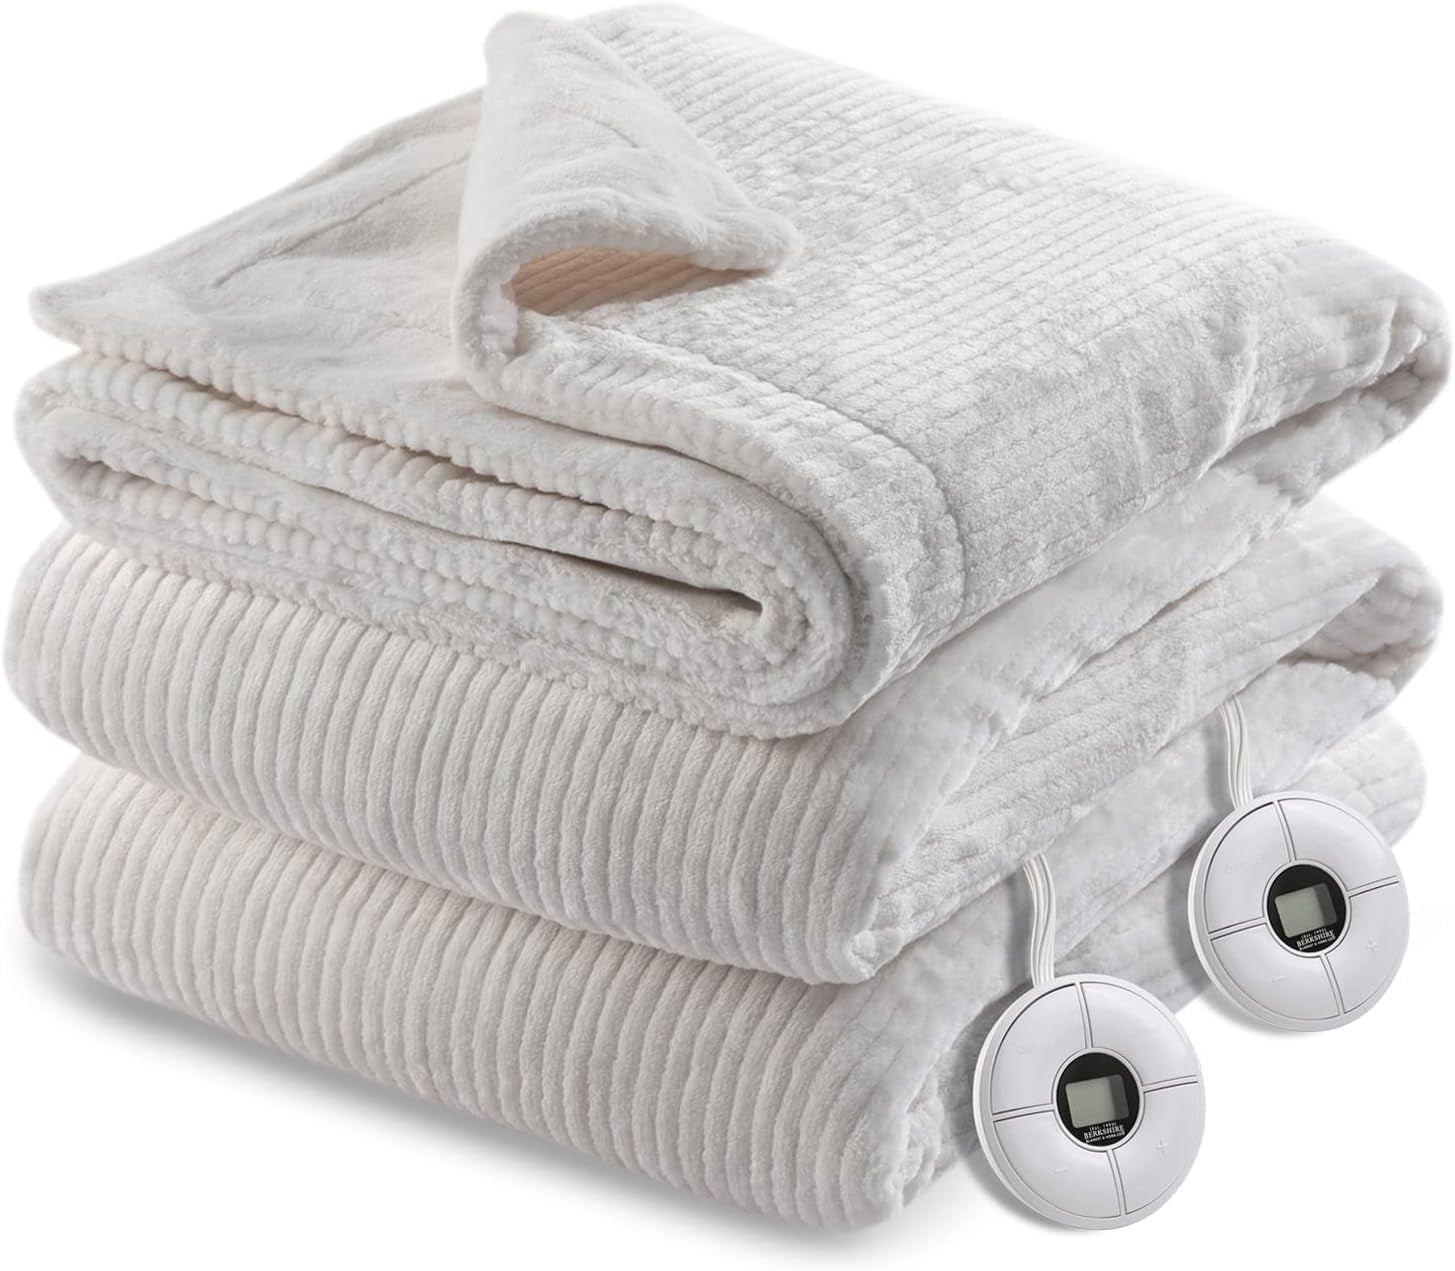 Corduroy Stripe Electric Heated Blanket | Dobby Textured Warmth ...